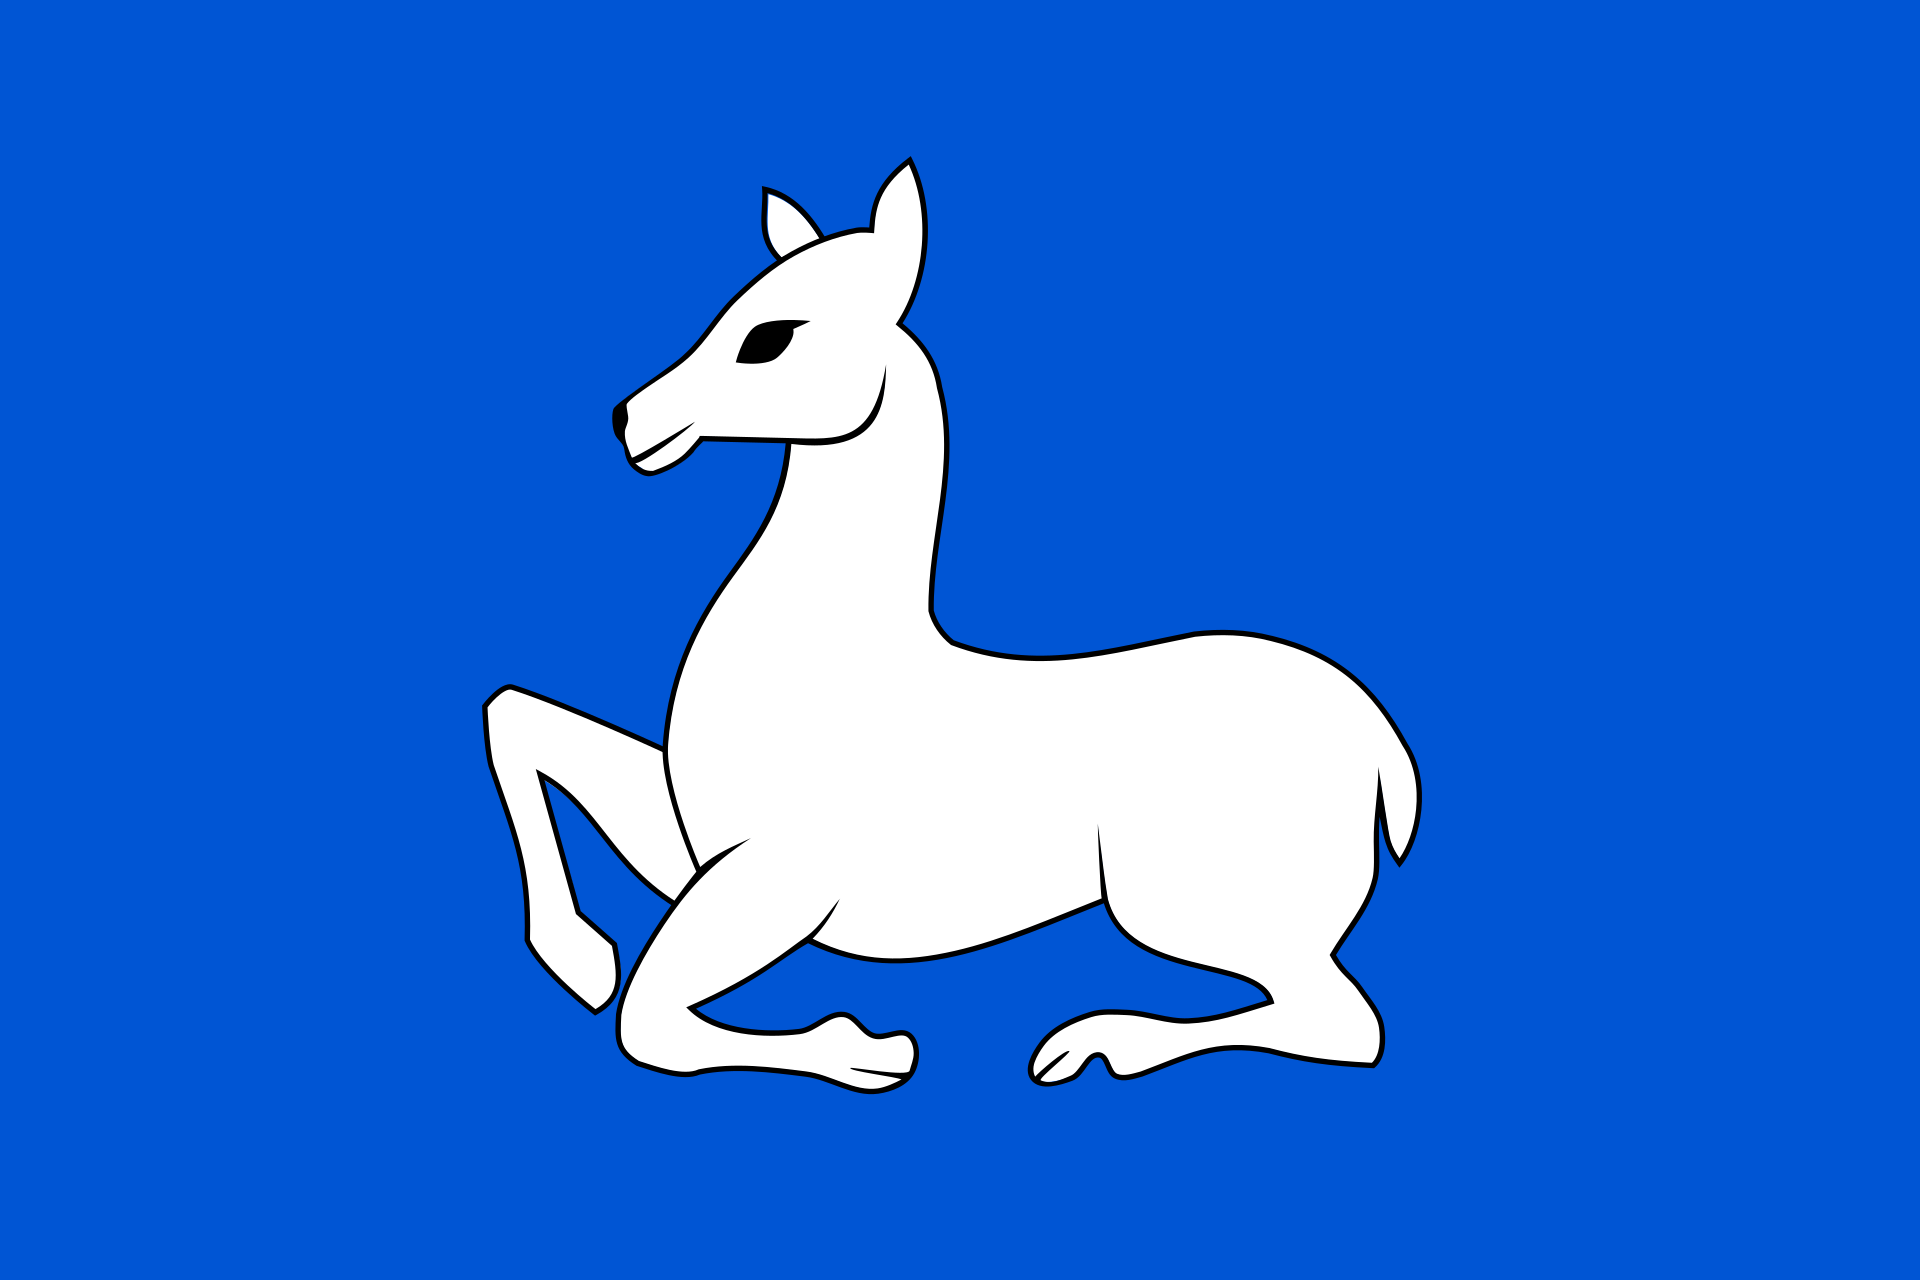 Obrázek vlajky města Rovensko Pod Troskami v rozlišení 1920x1280 Liberecký kraj Rovenská vlajka 